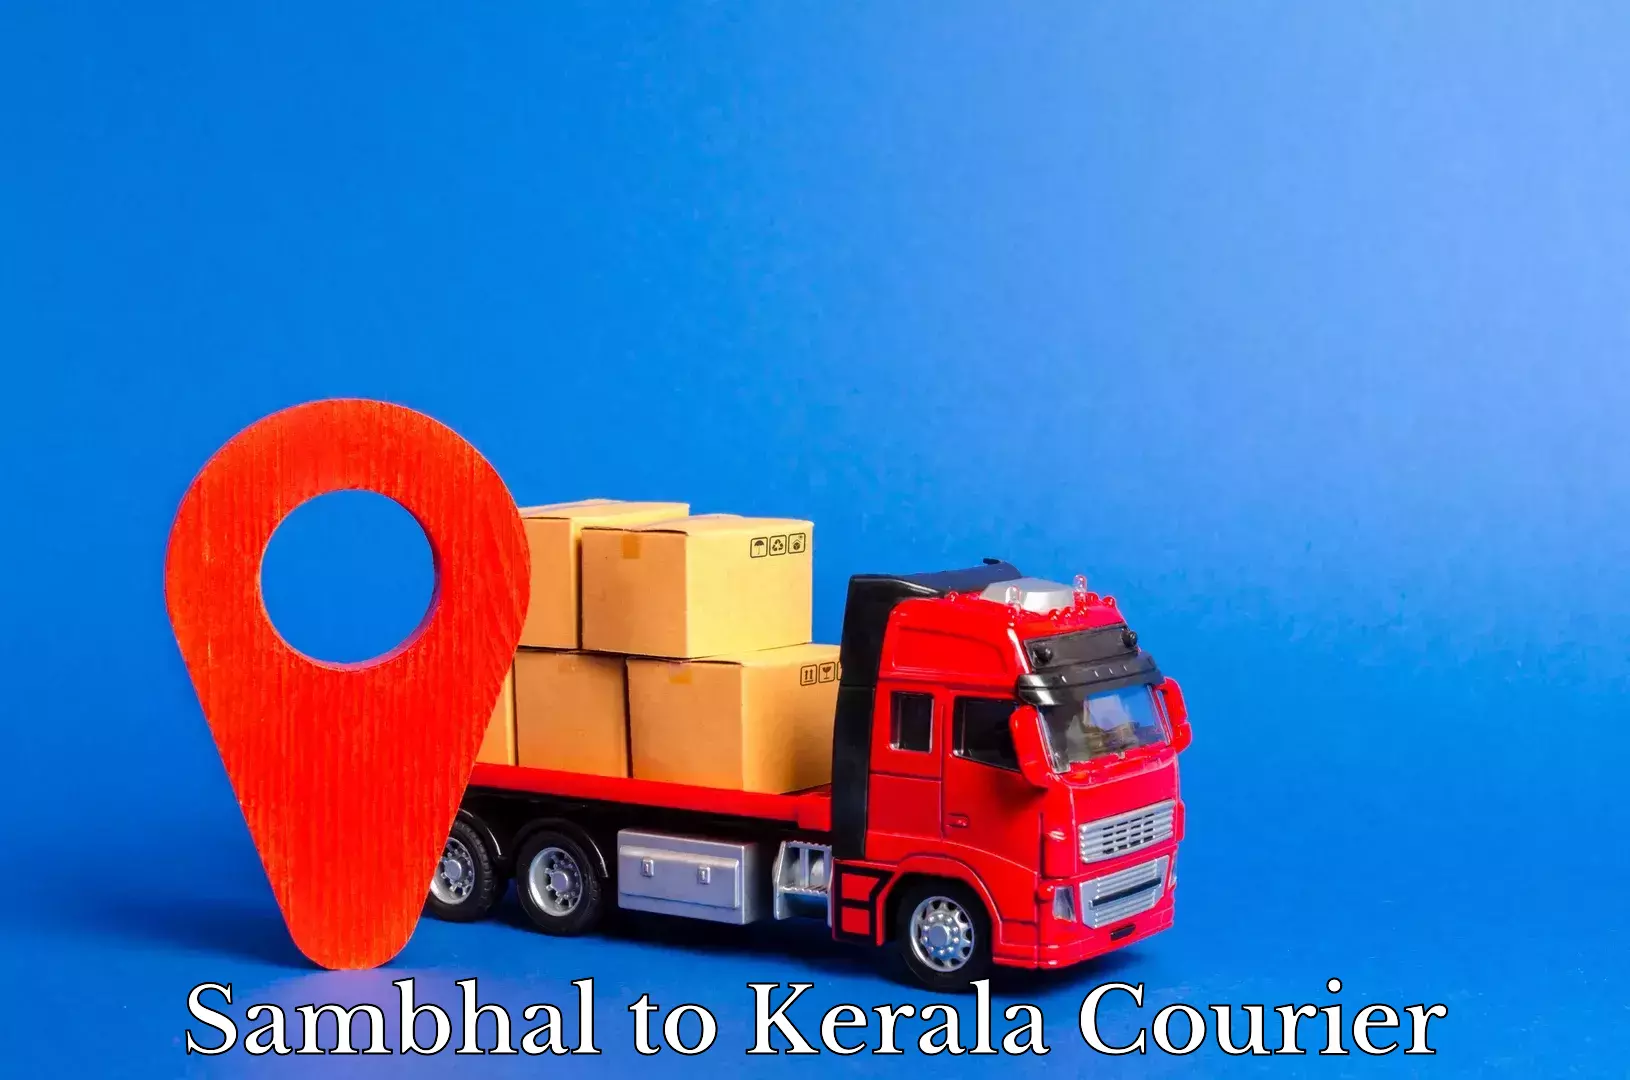 Express delivery capabilities Sambhal to Kerala